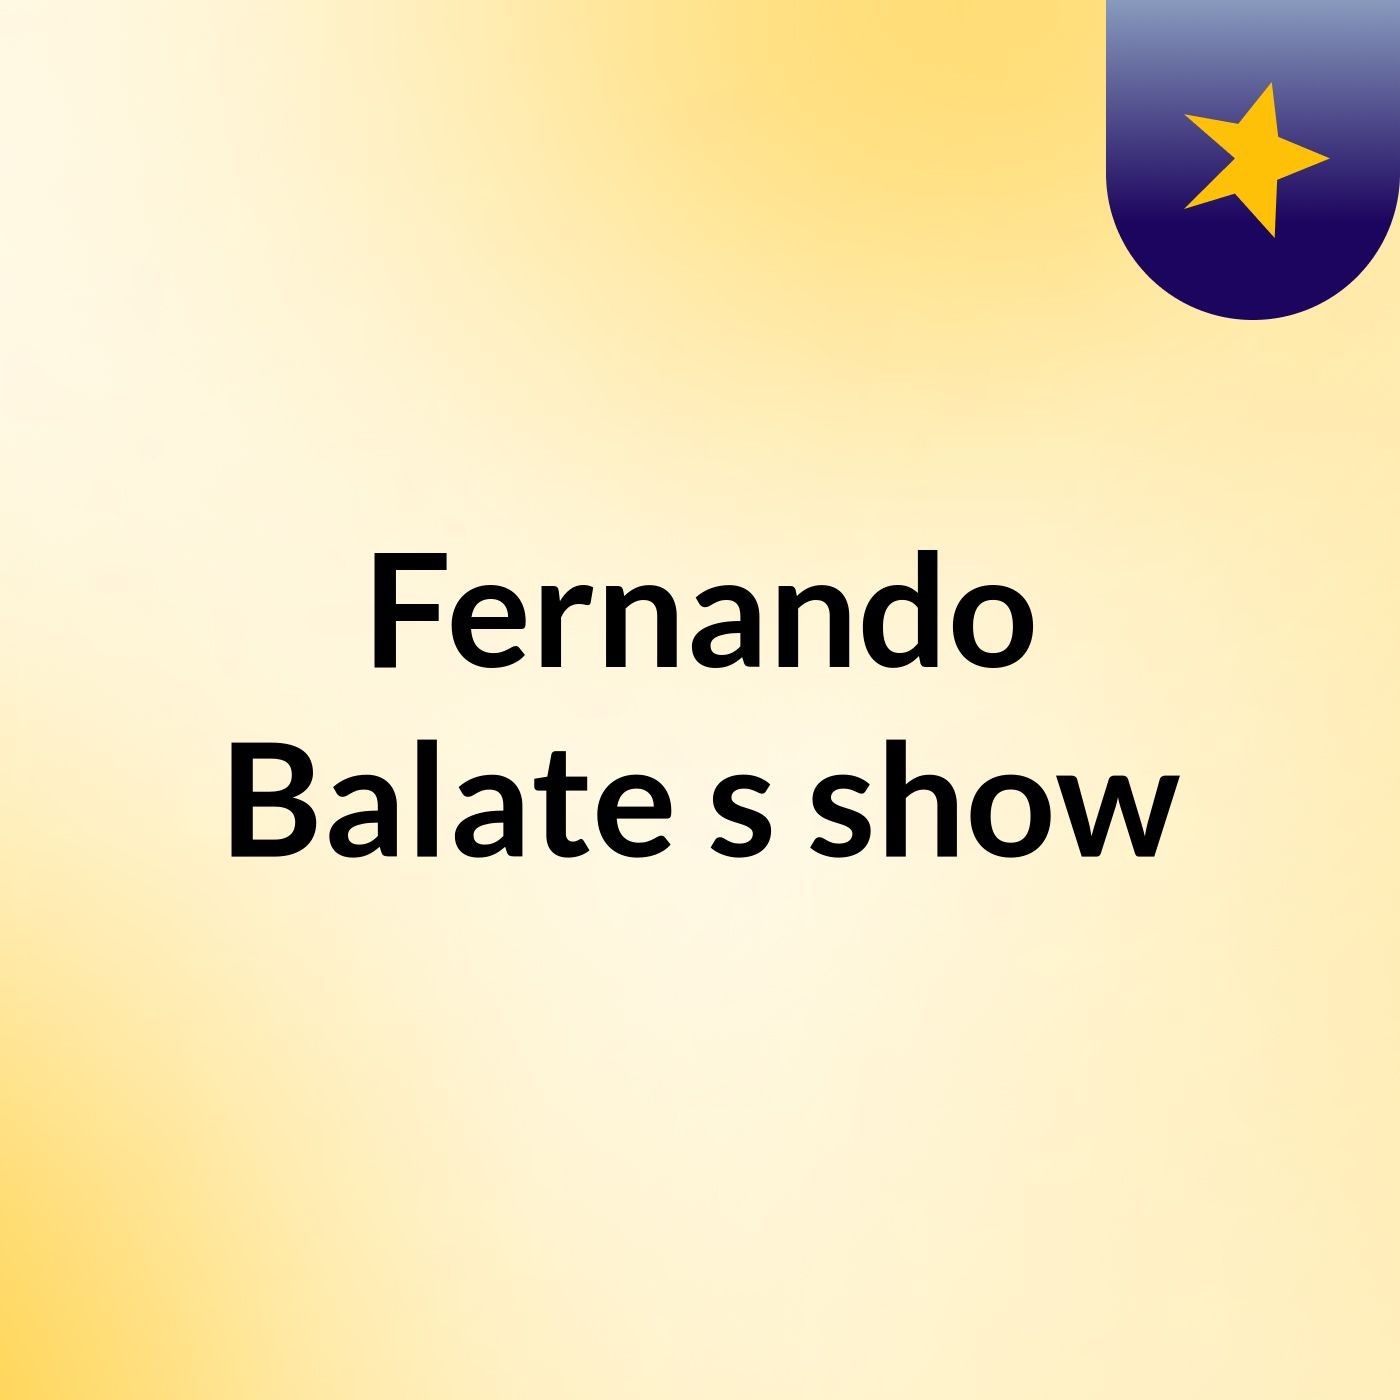 Fernando Balate's show